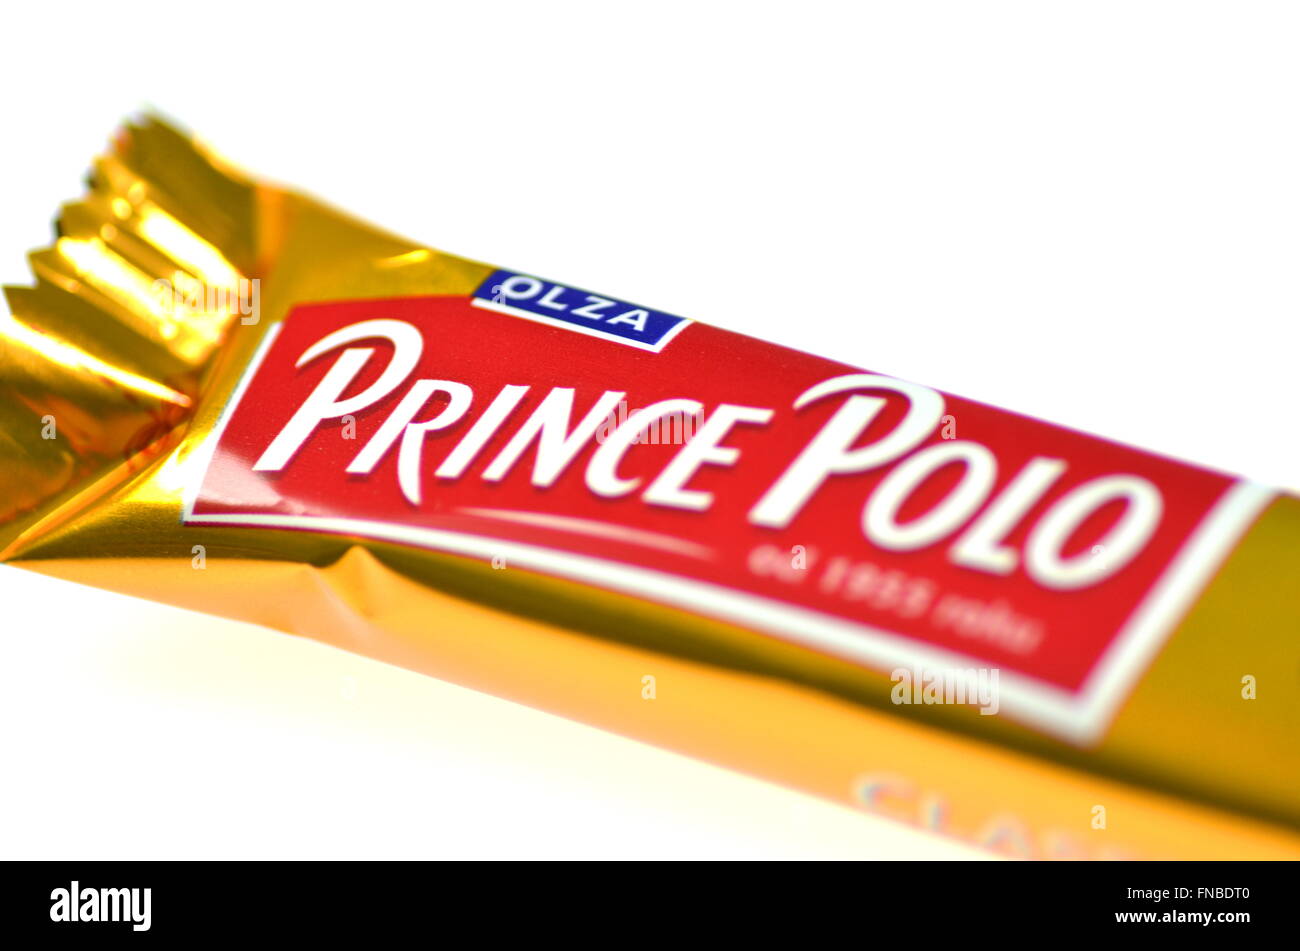 Prince Polo chocolate bar isolated on white background Stock Photo - Alamy